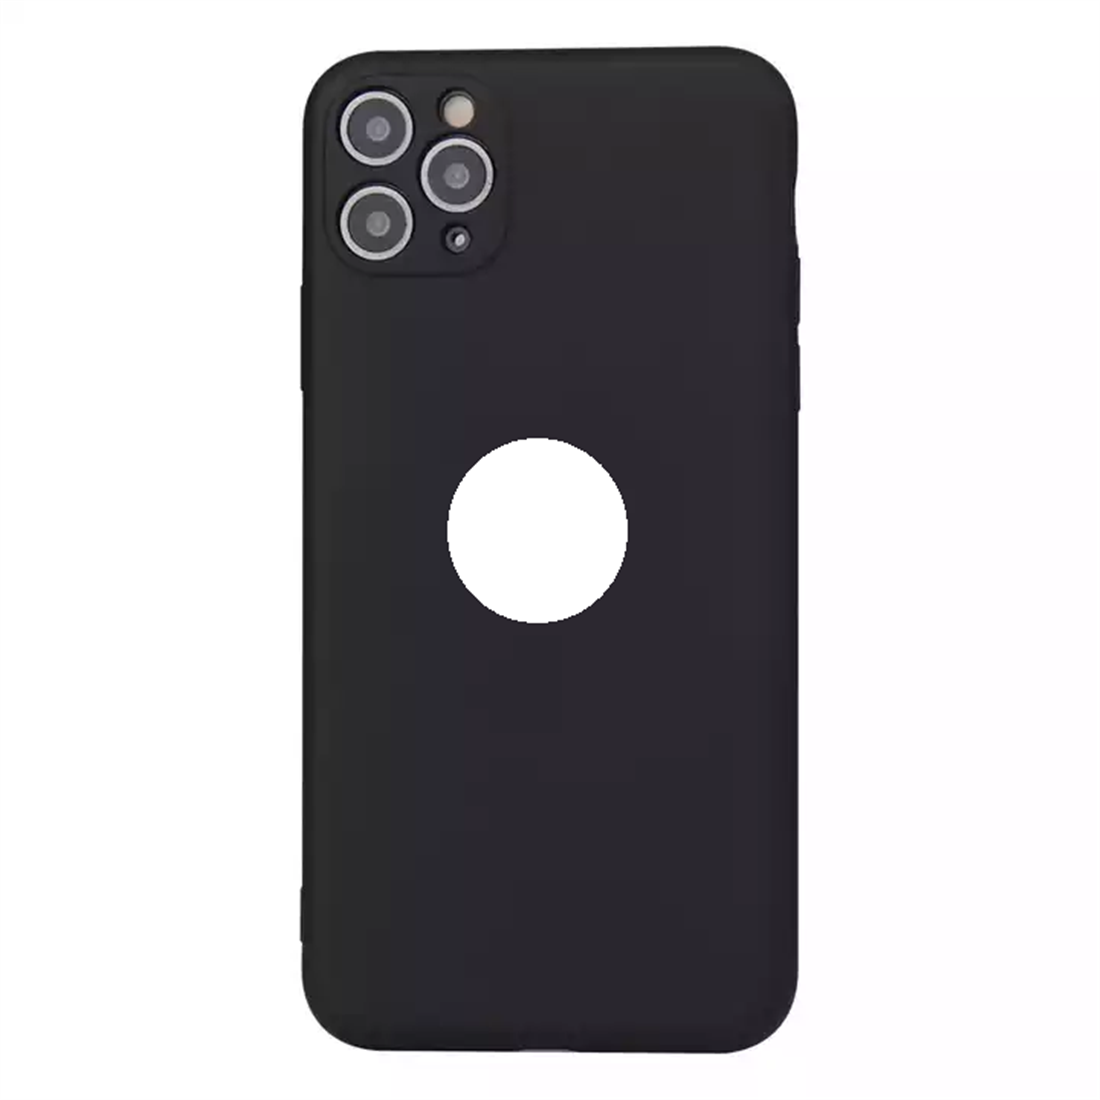 Apple iPhone 12 Pro Max PU Black Back Cover Smartphone Case